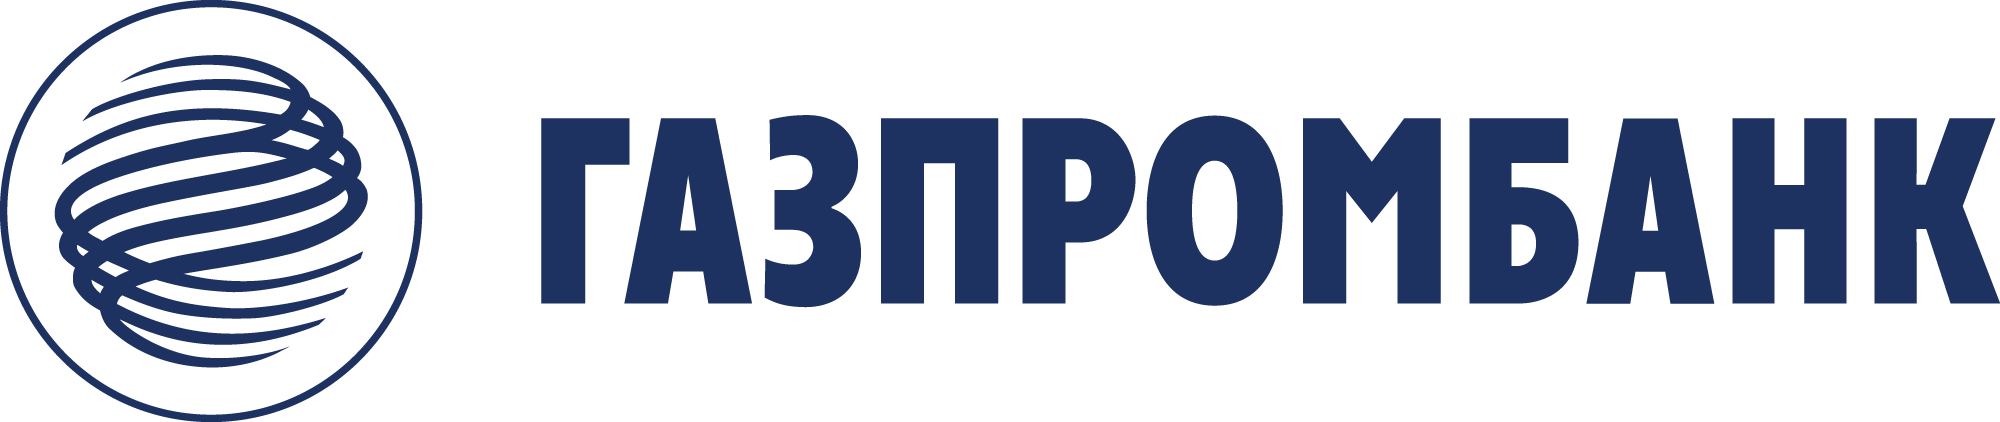 The Gazprombank Group logo